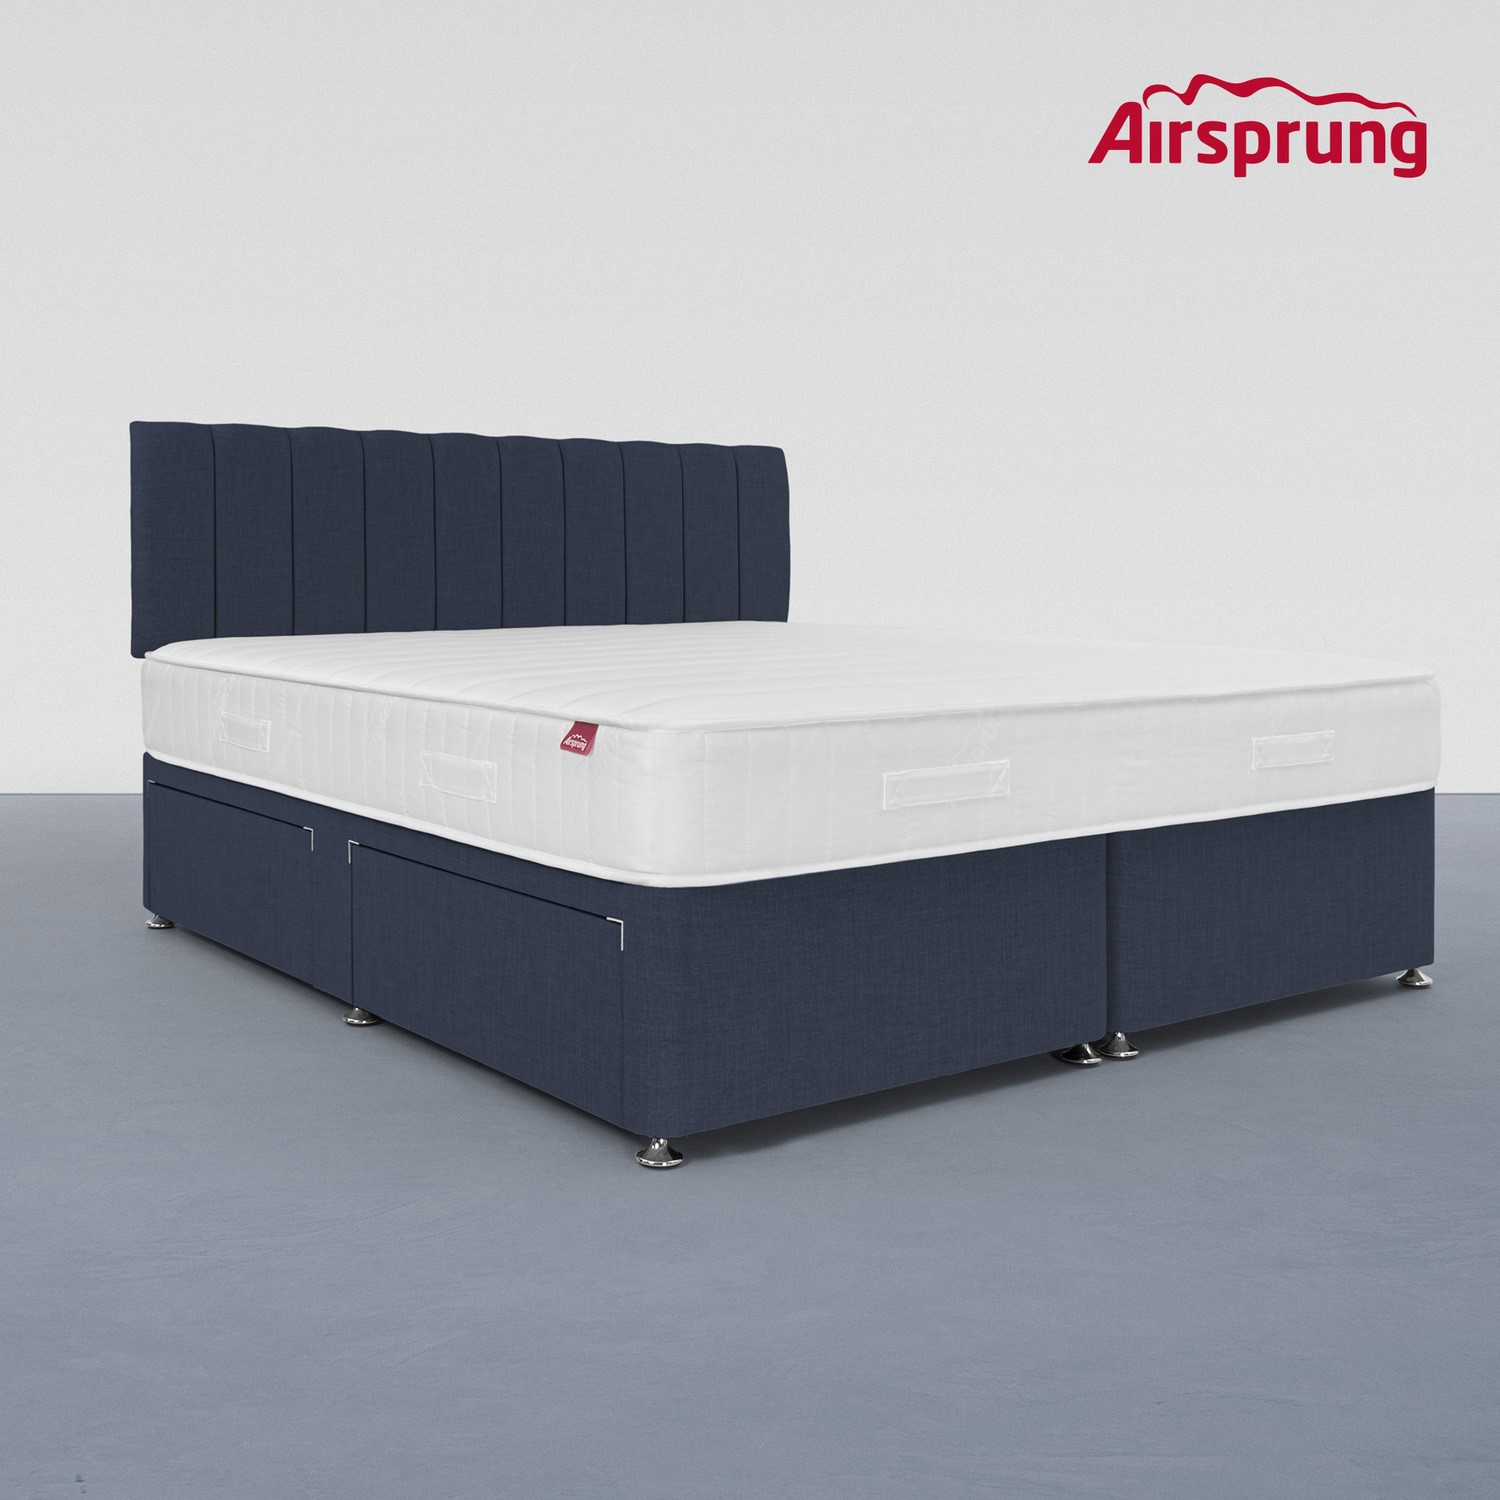 Photo of Airsprung super king 4 drawer divan bed with hybrid mattress - midnight blue